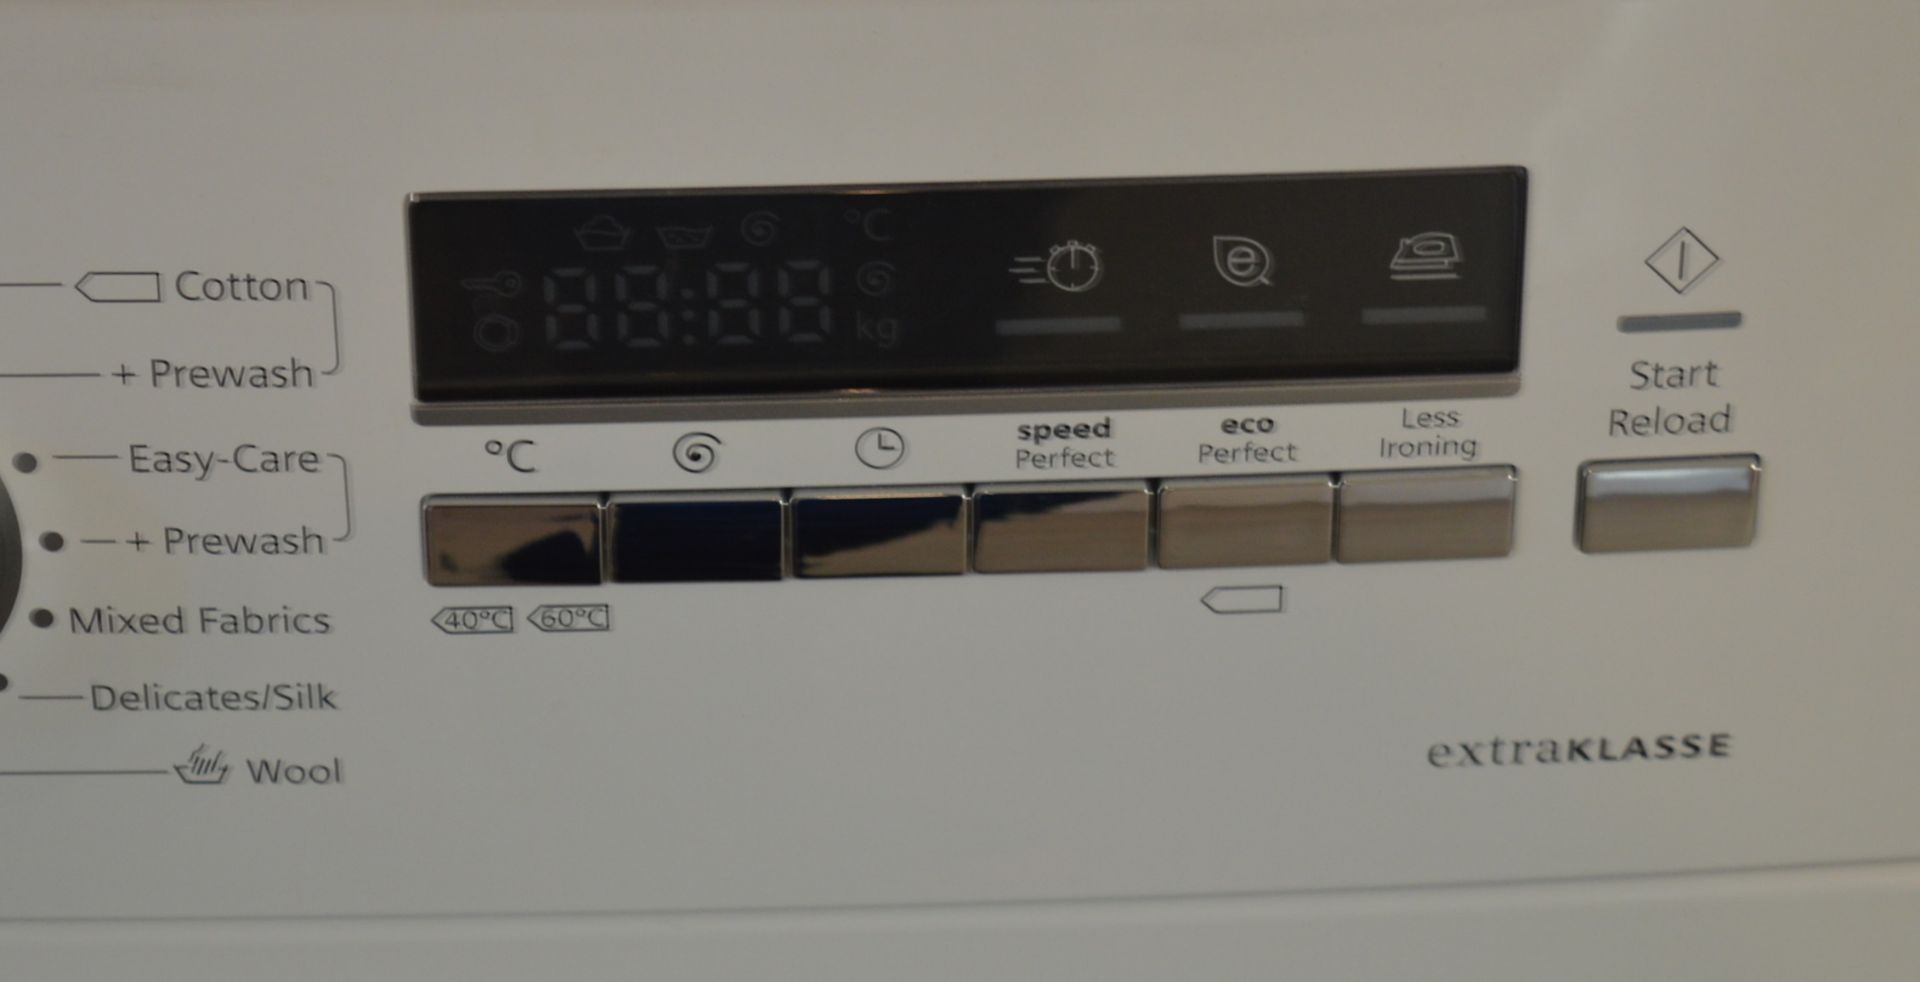 1 x Siemens iQ300 extraKlasse Front Loading Automatic Washing Machine - Model Product IDWM14K280GB - - Image 4 of 9